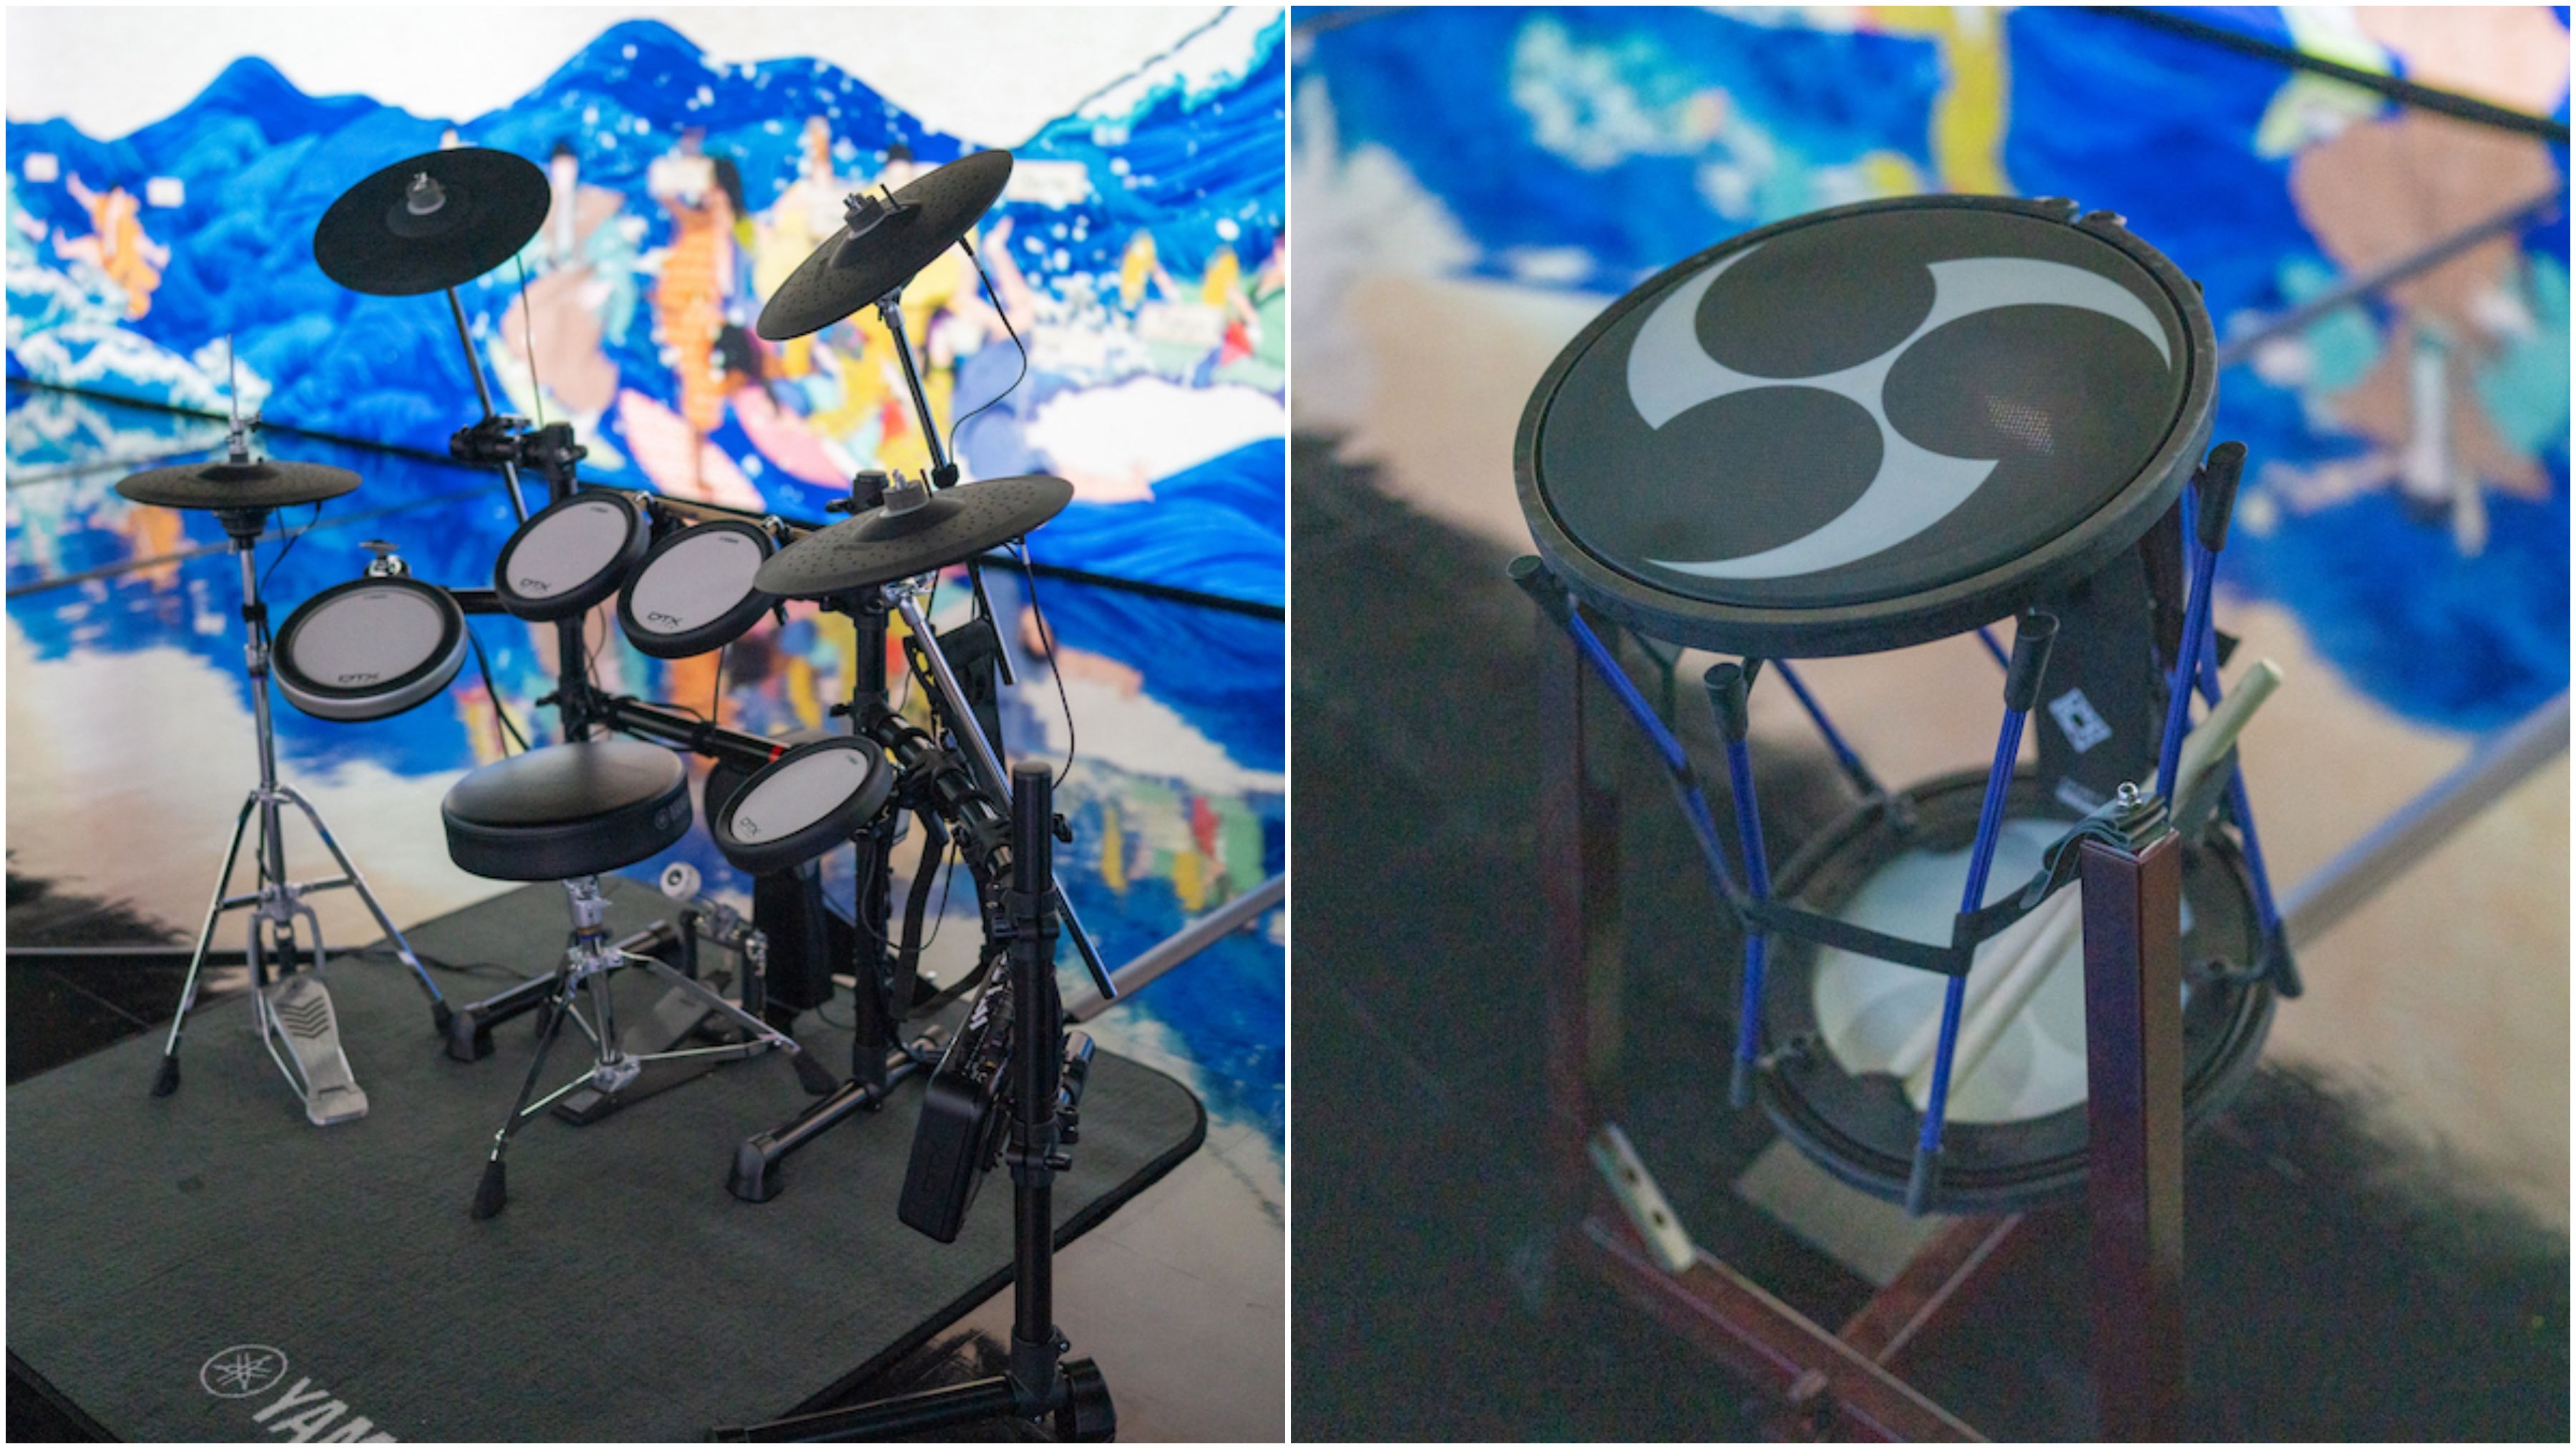 KDDIが運営するGINZA 456における「BEAT HOKUSAI」のドラムと和太鼓